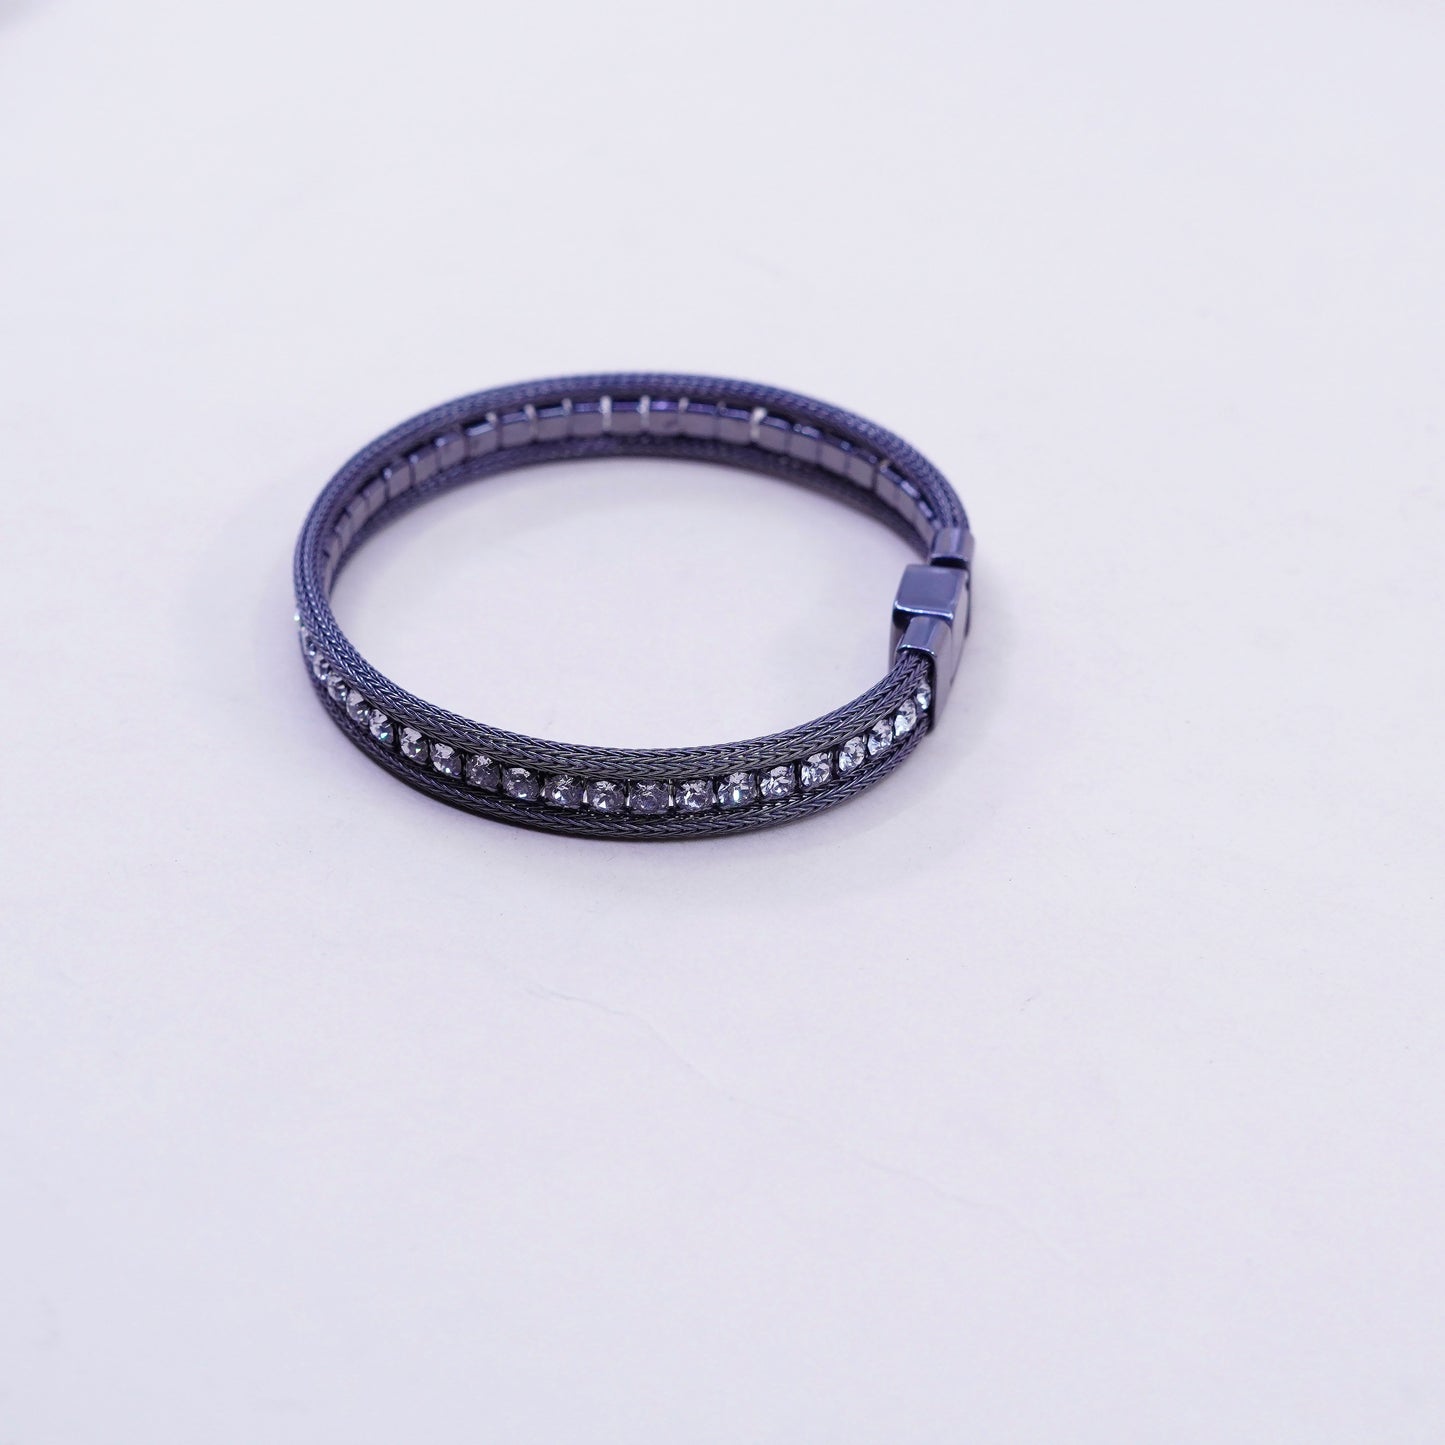 6.75”, vtg Italy sterling silver bracelet, oxidized 925 double wheat chain cz